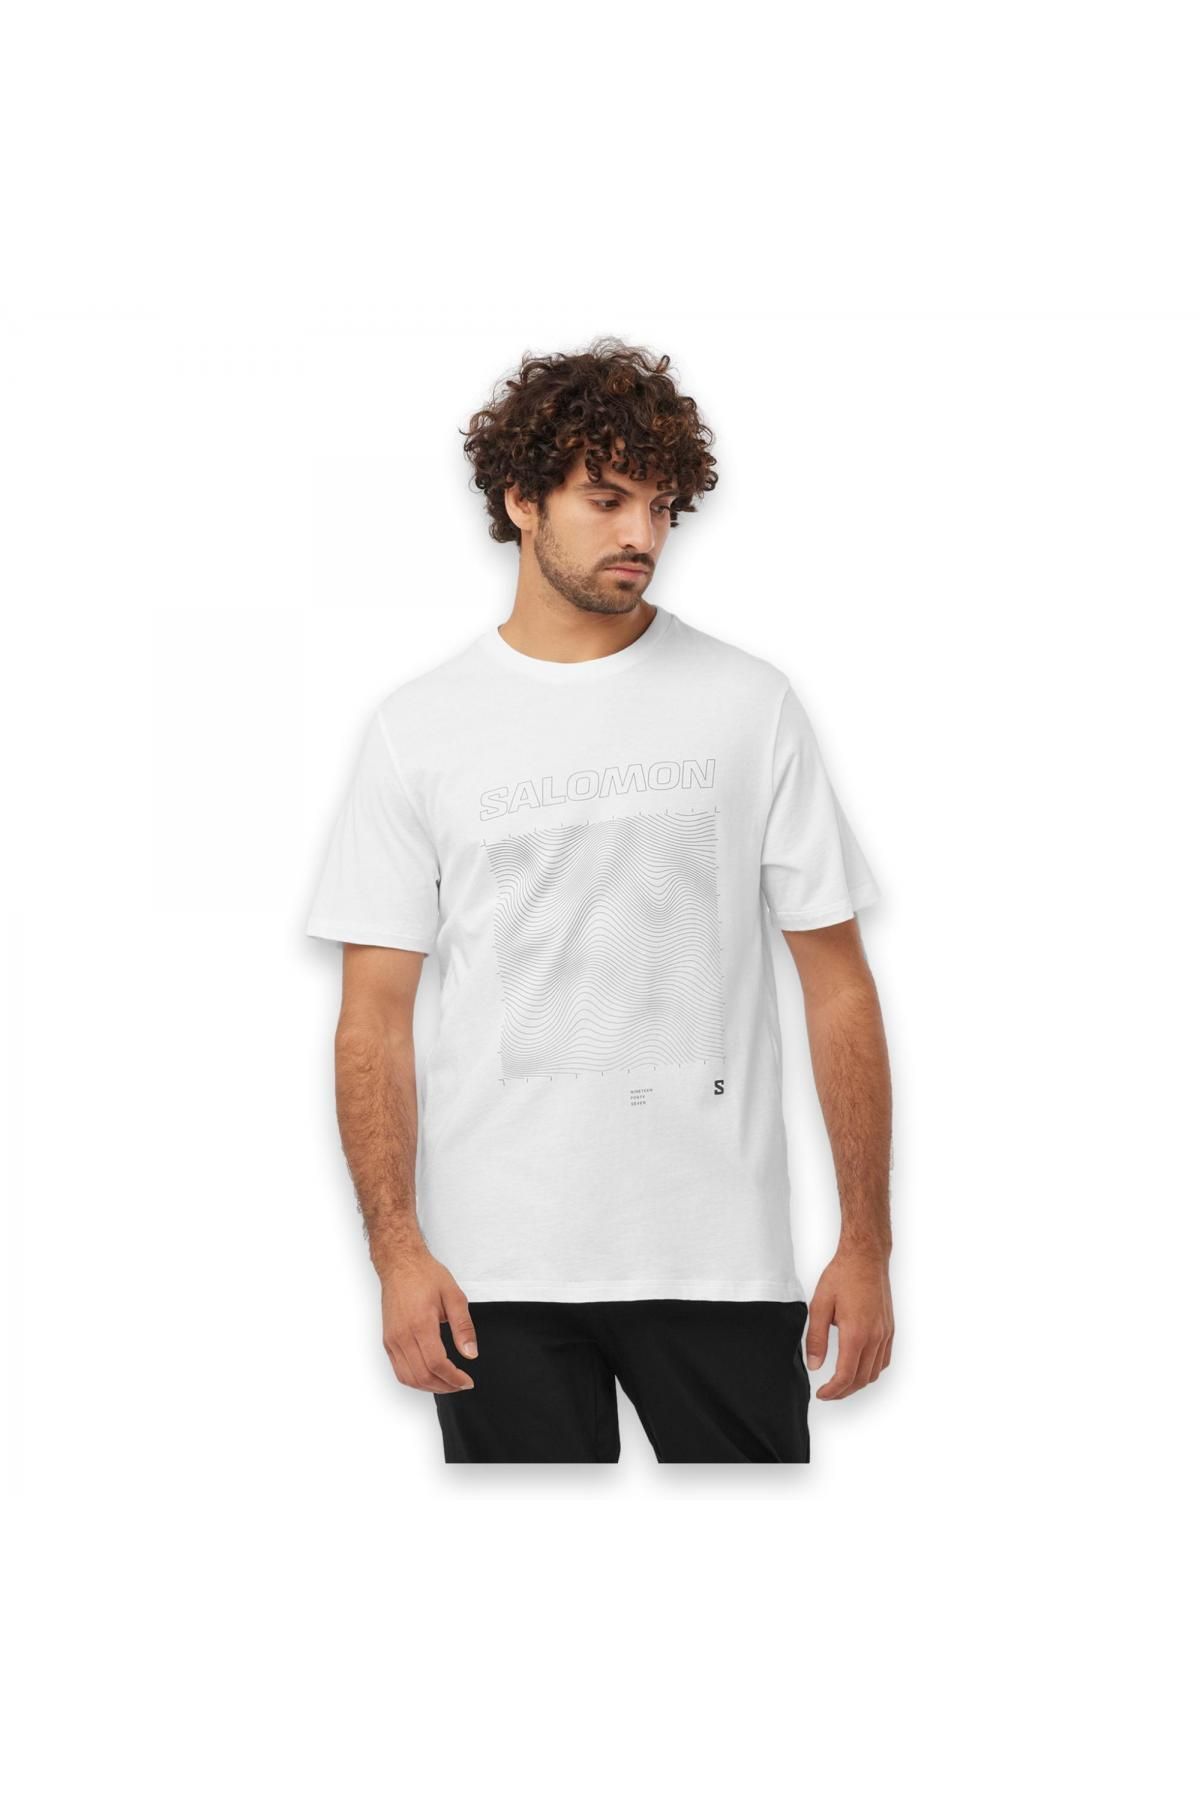 Salomon Lc2219200 Graphic Ss Tee M Beyaz Erkek T-Shirt